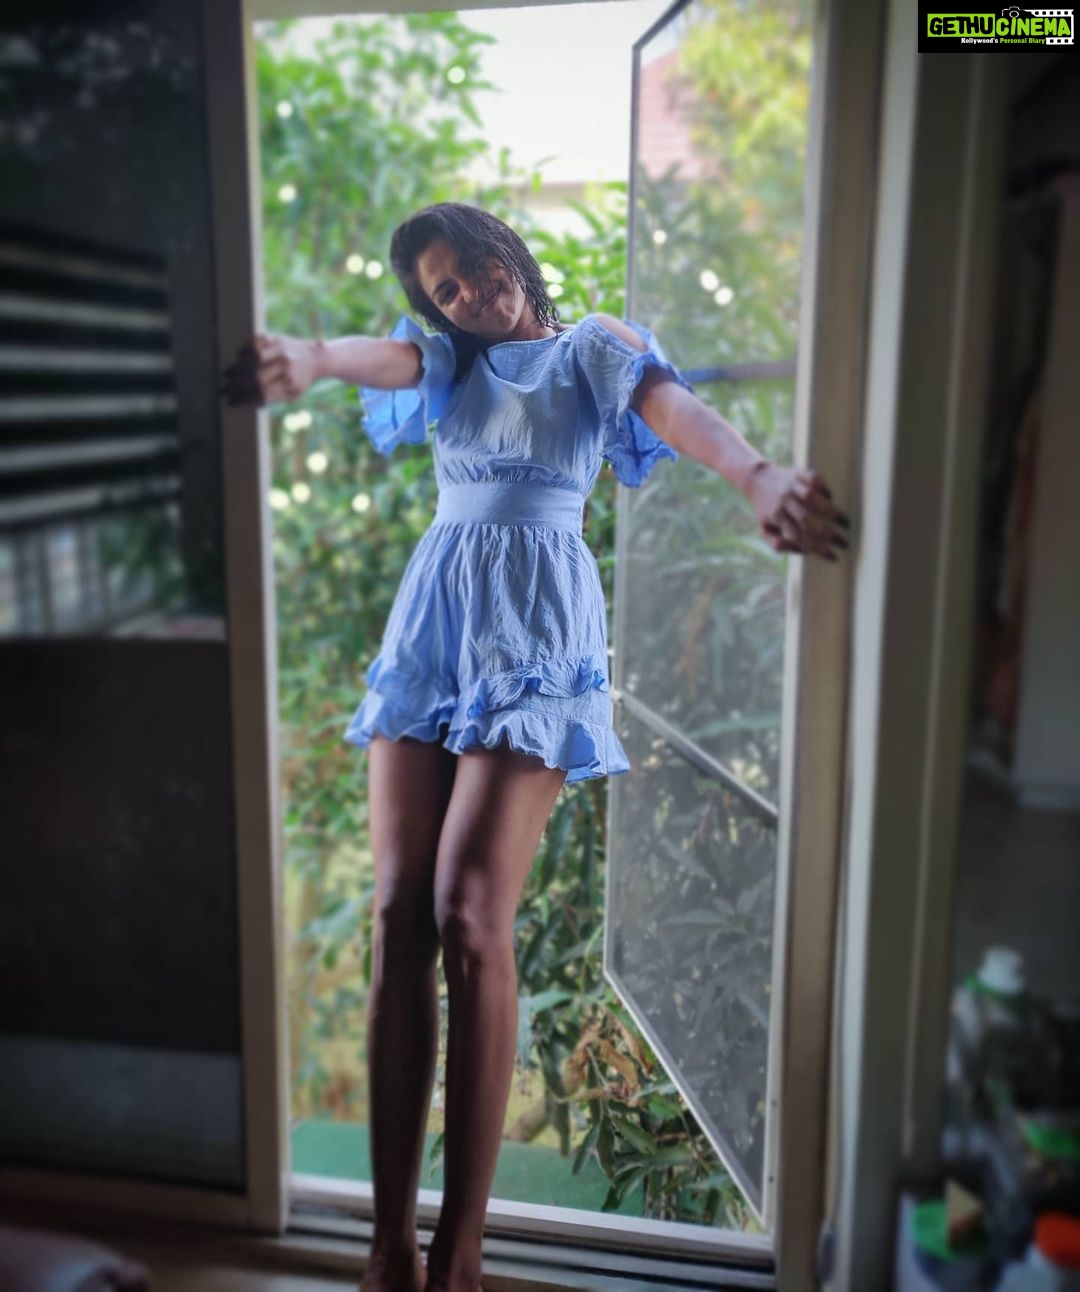 Amala Paul - 250K Likes - Most Liked Instagram Photos